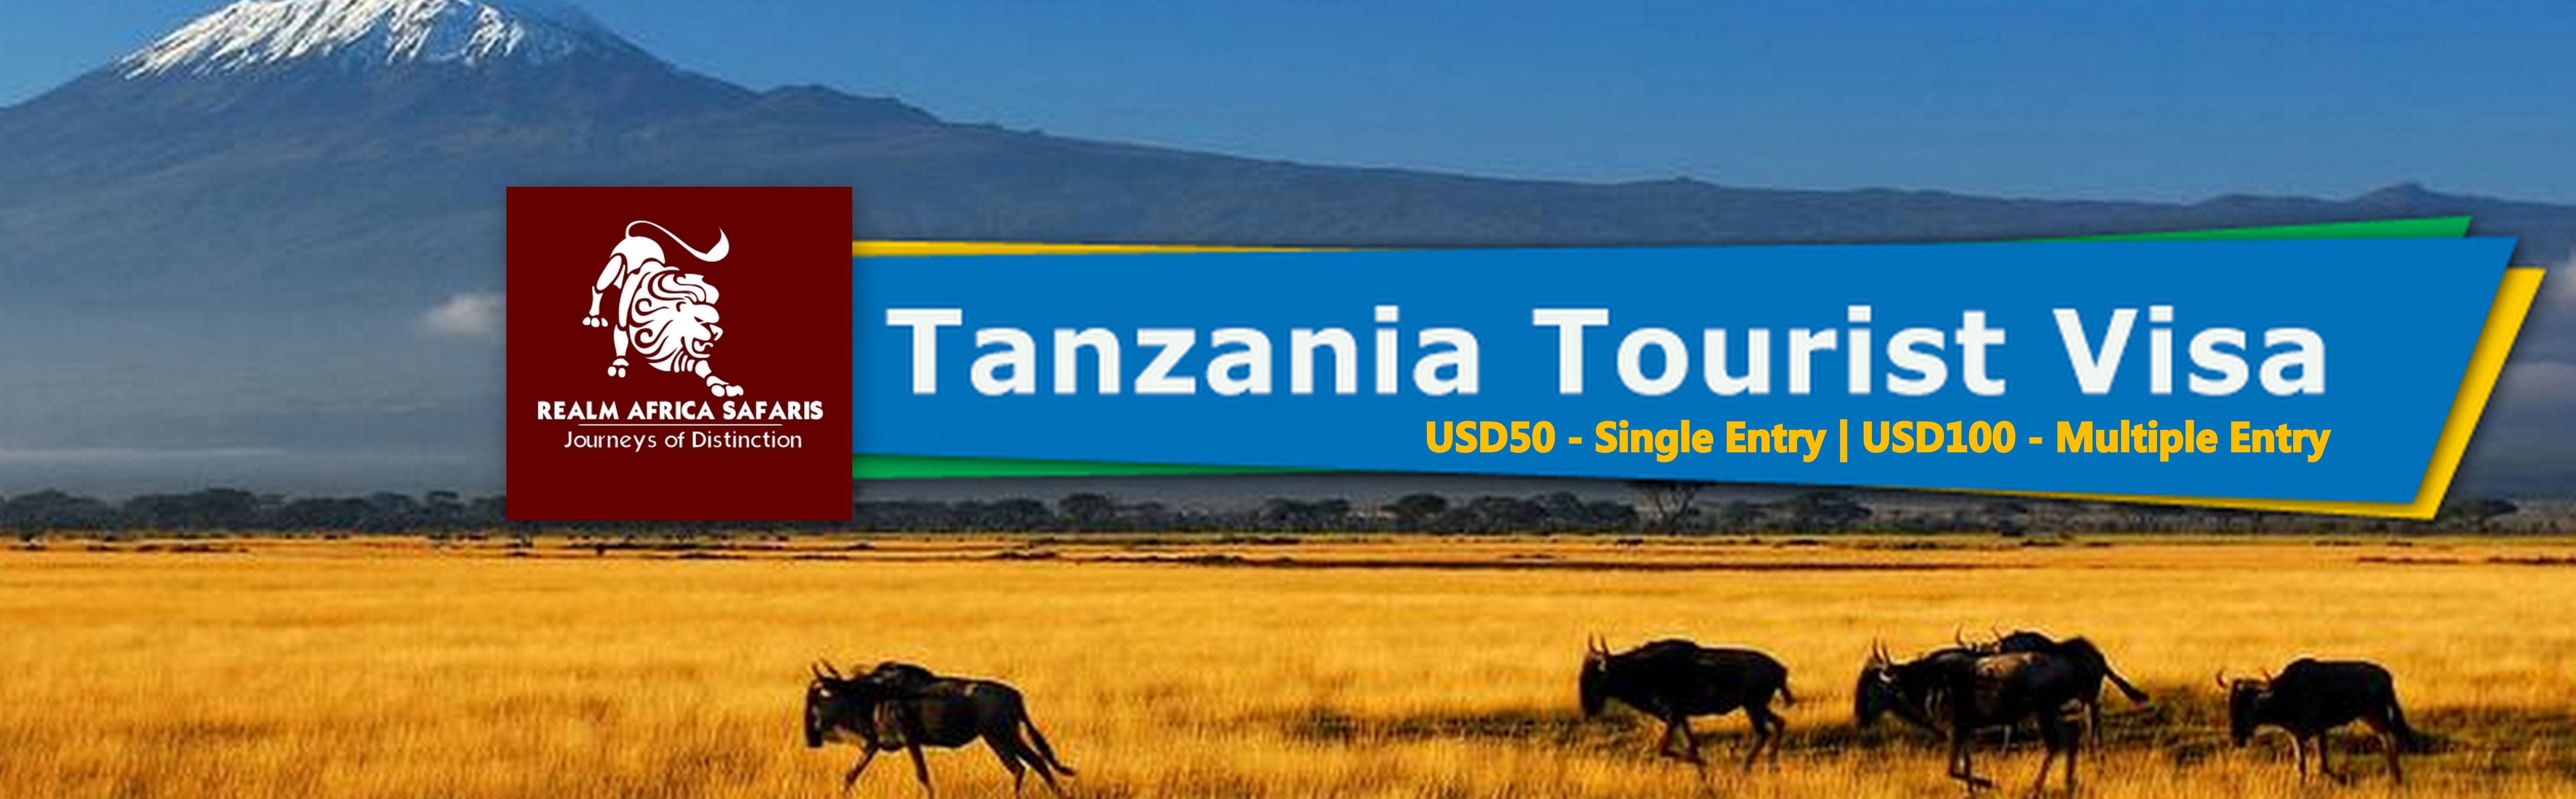 tanzania tourism ministry